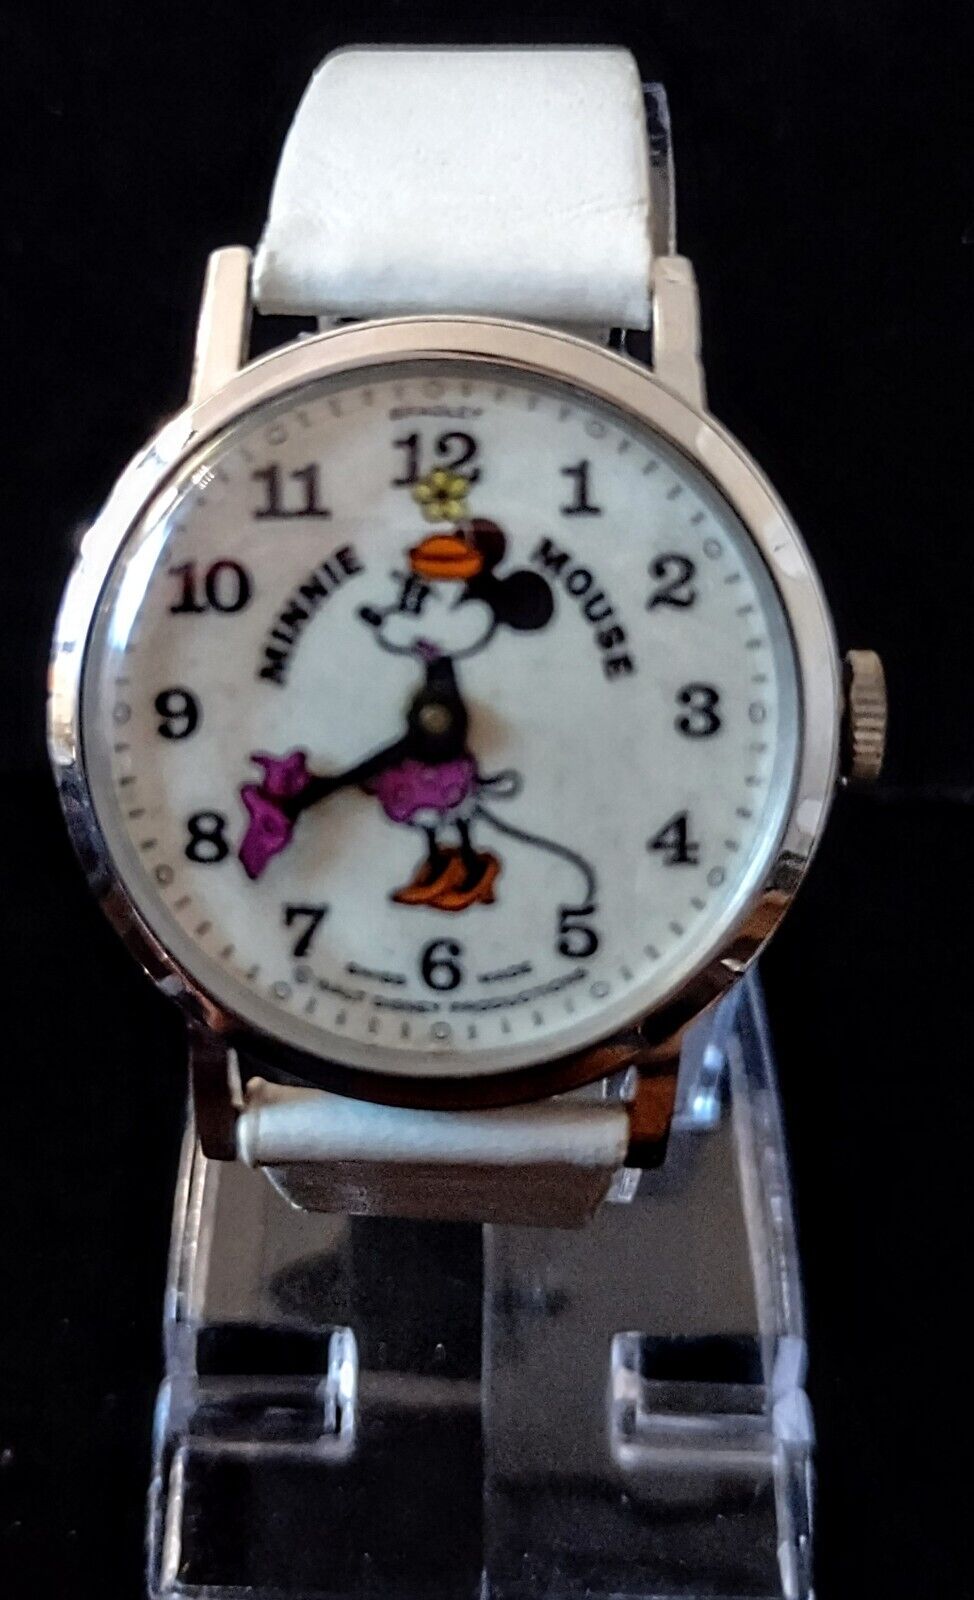 Ultra Rare/Near Pristine 1970s Swiss Made Mechanical Minnie Mouse Watch by Bradl